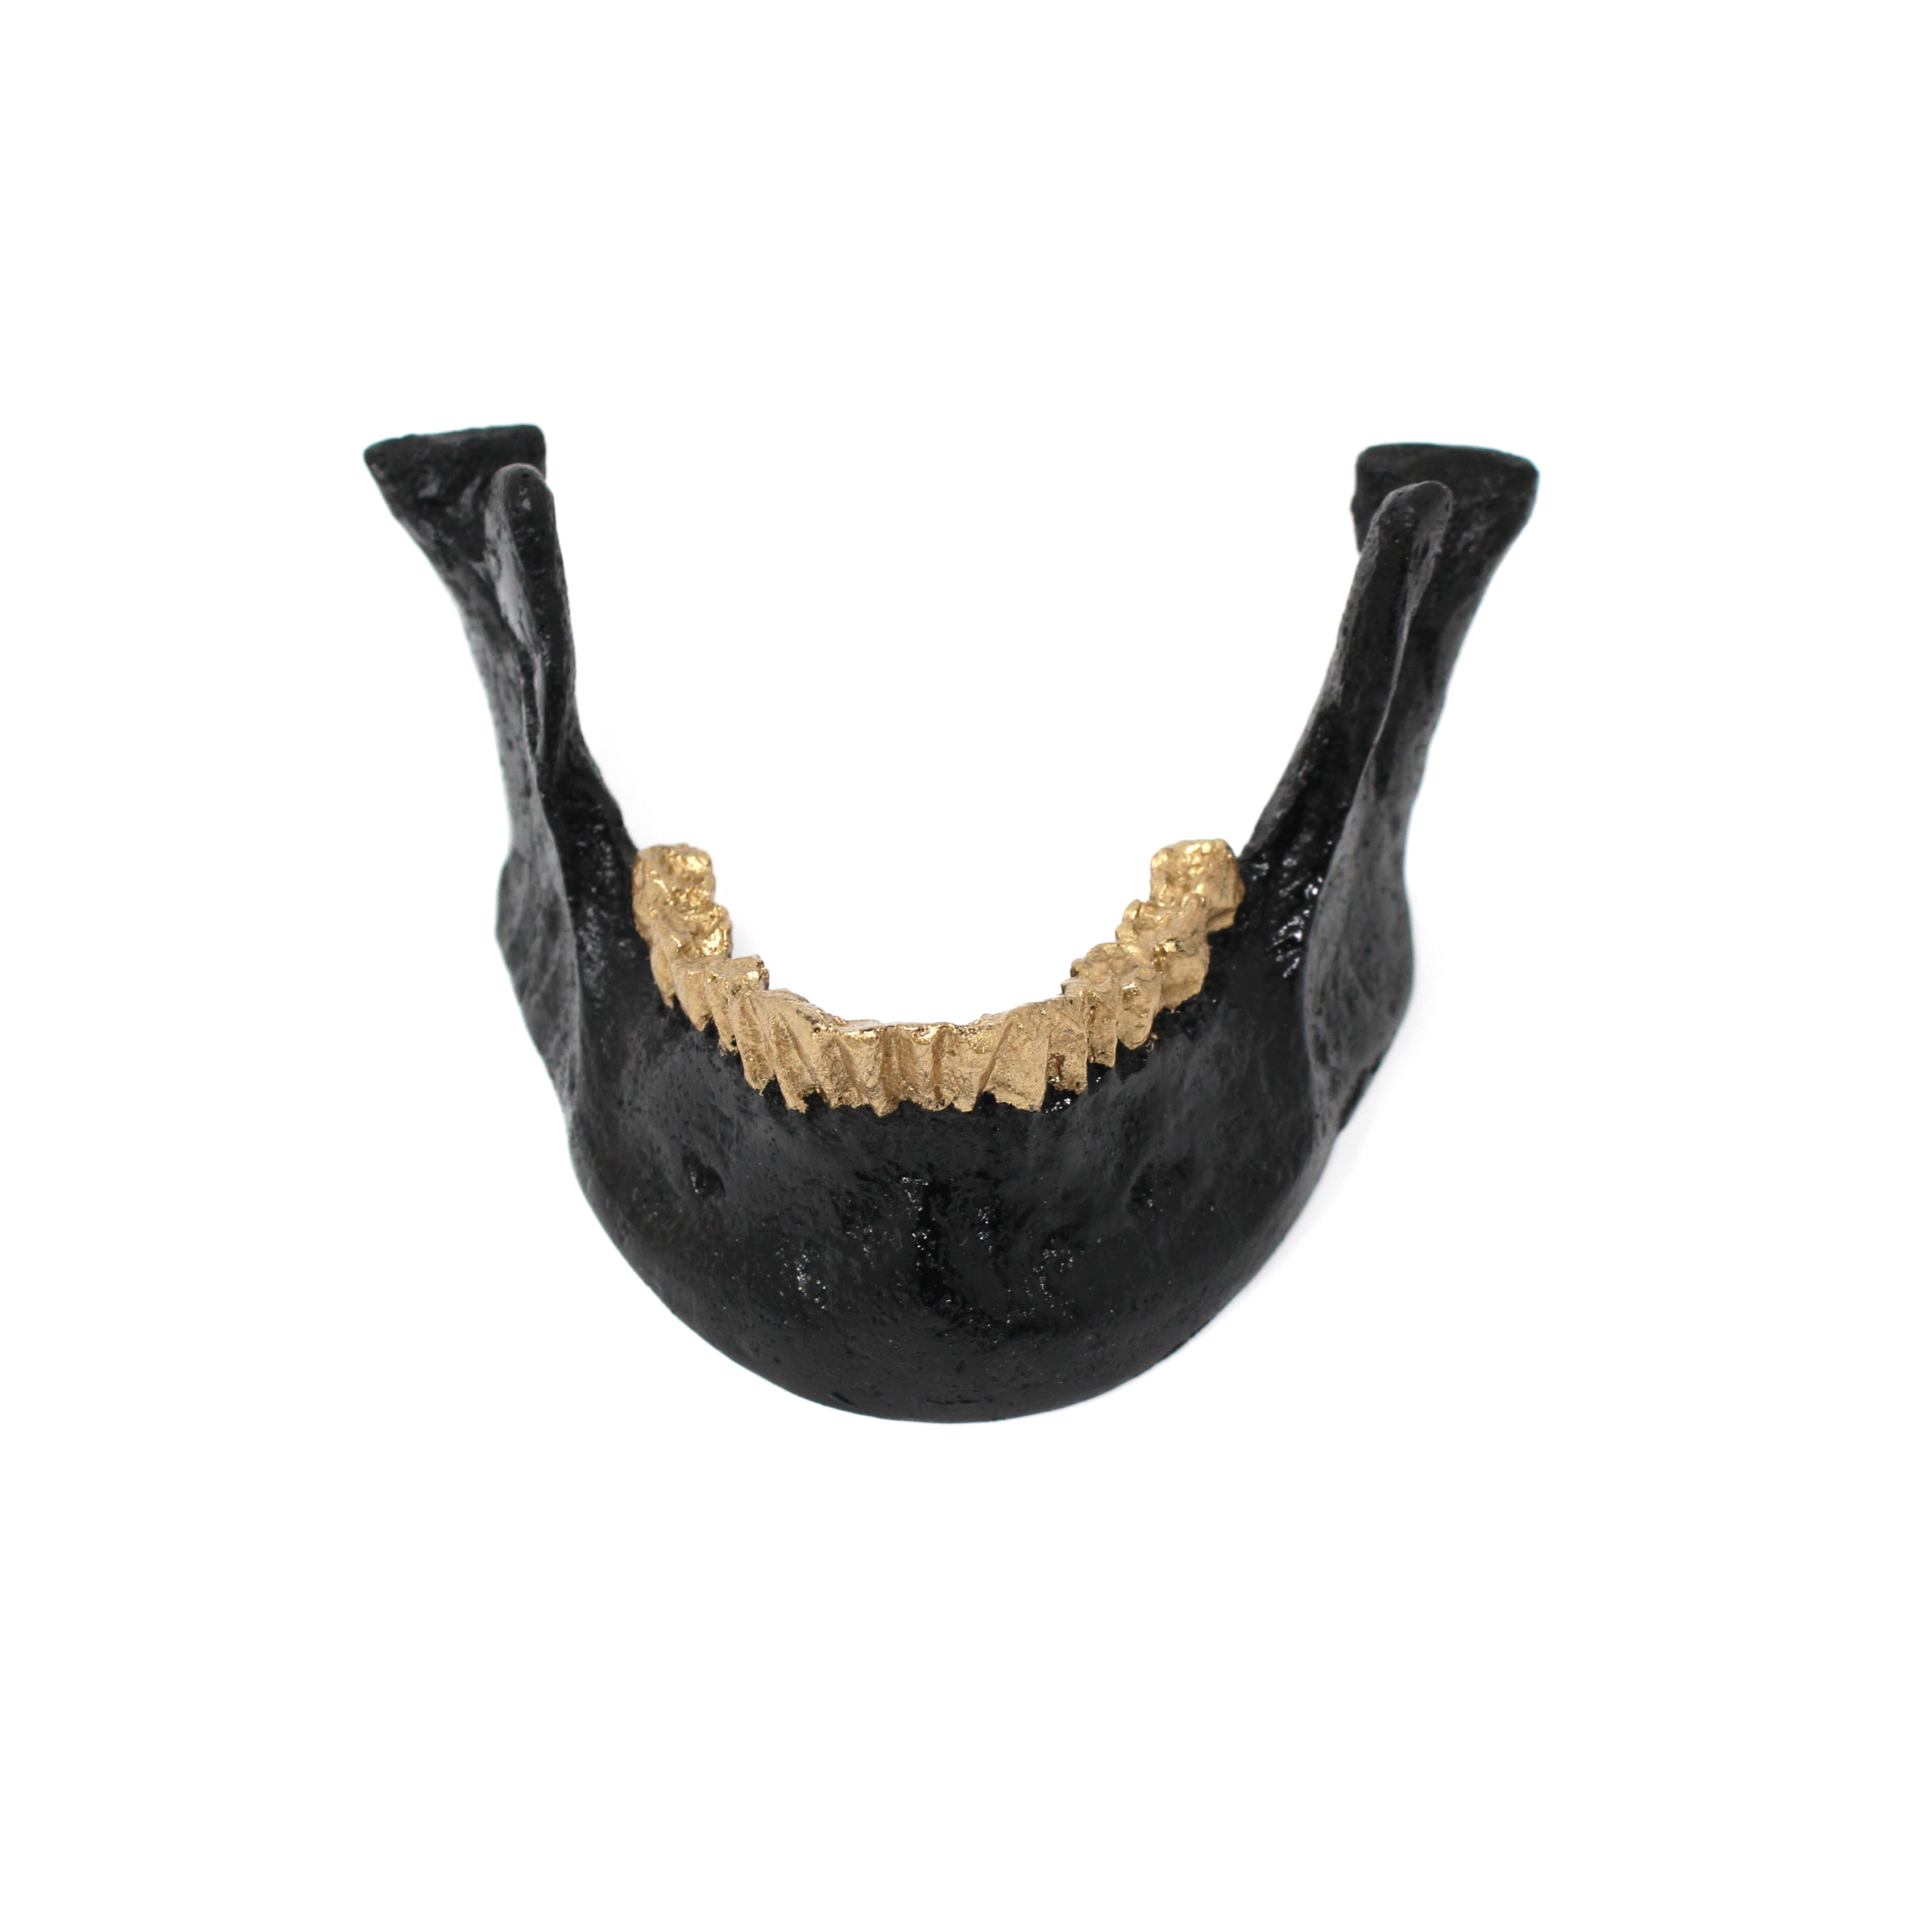 The Blackened Teeth Black with Gold Teeth Jaw Card Holder